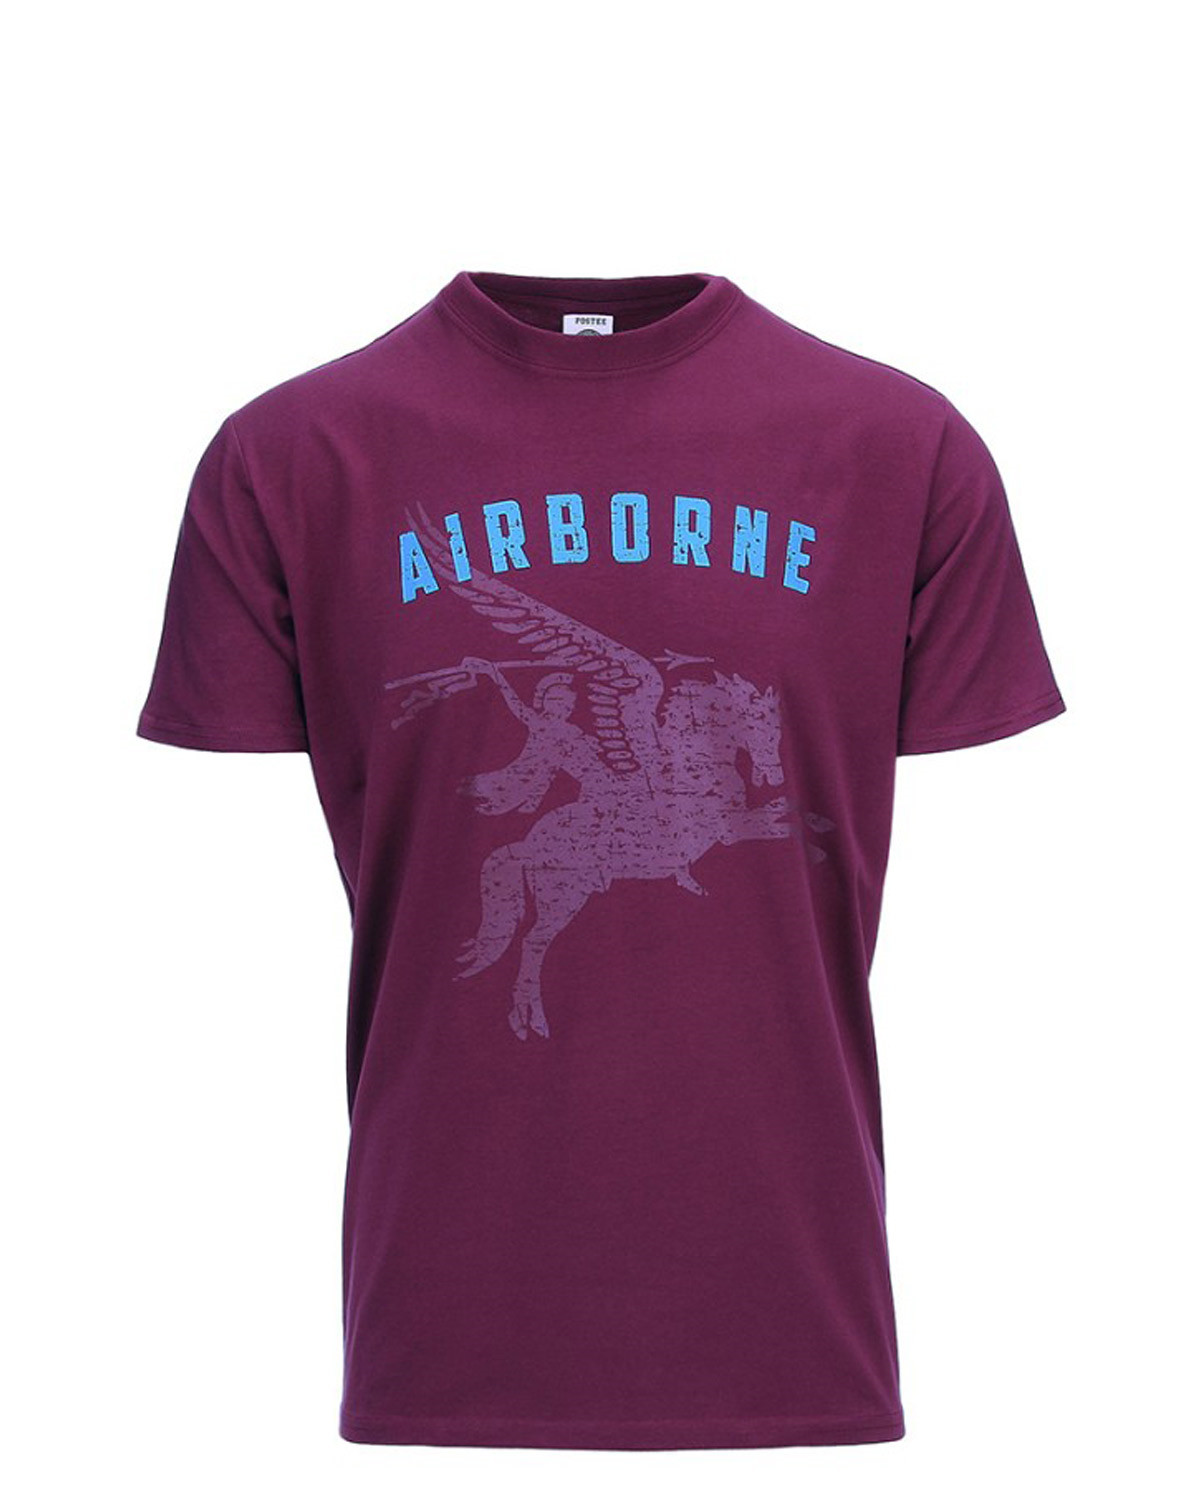 Fostex T-shirt Airborne Pegasus (Maroon, M)